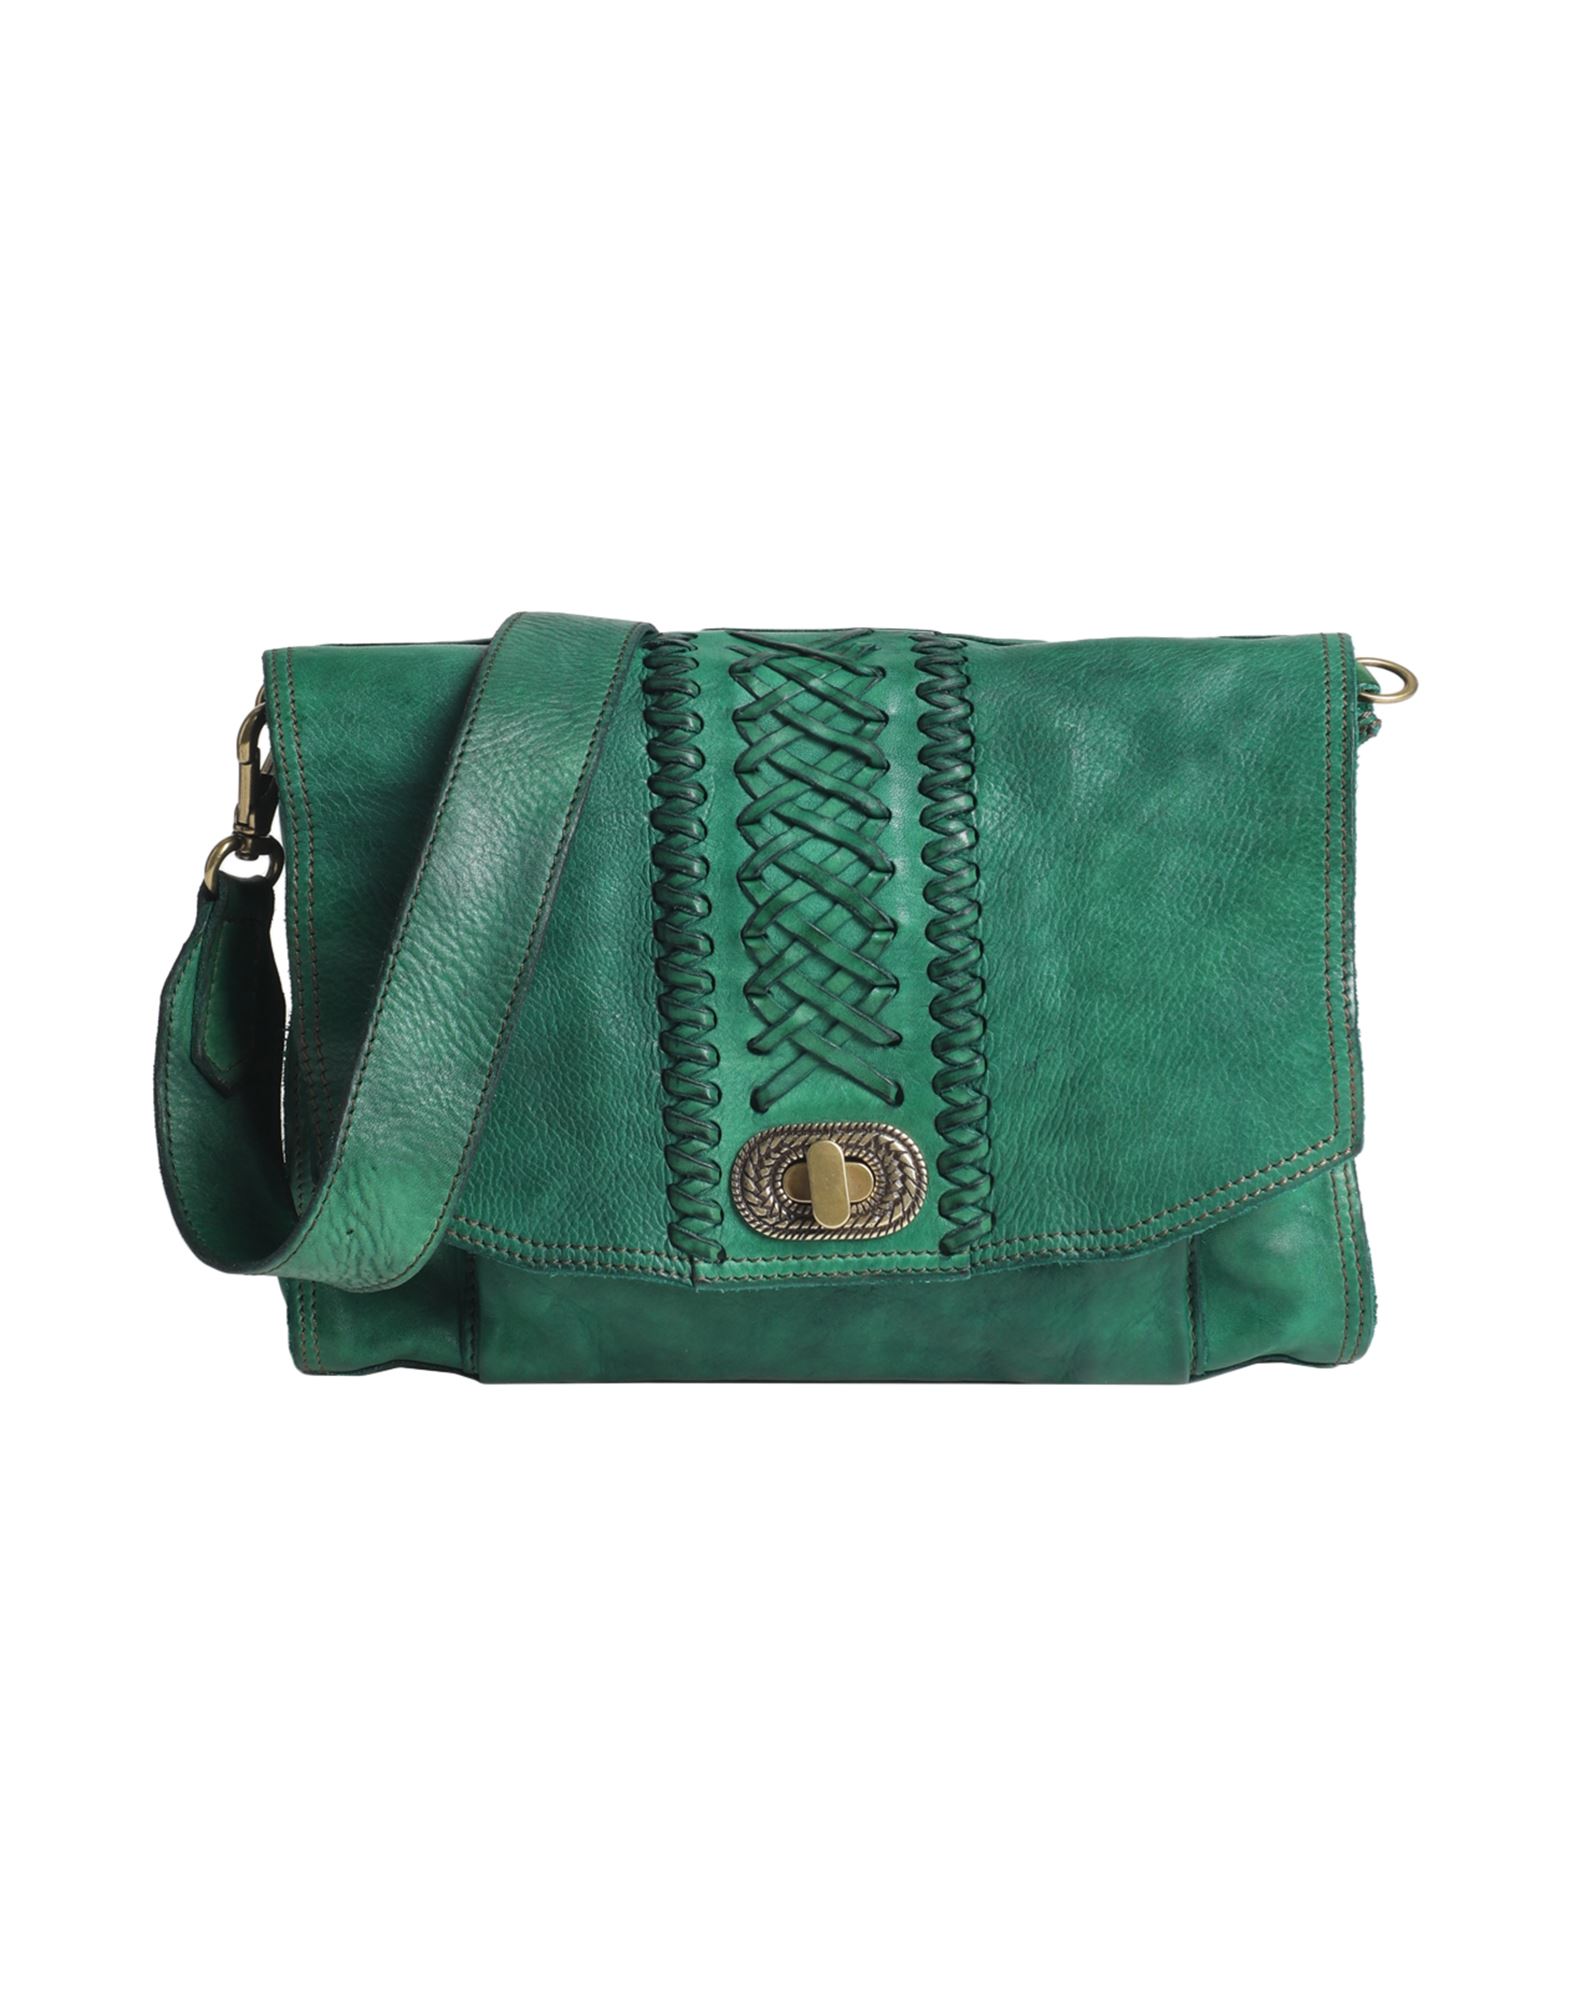 Campomaggi Handbags In Green